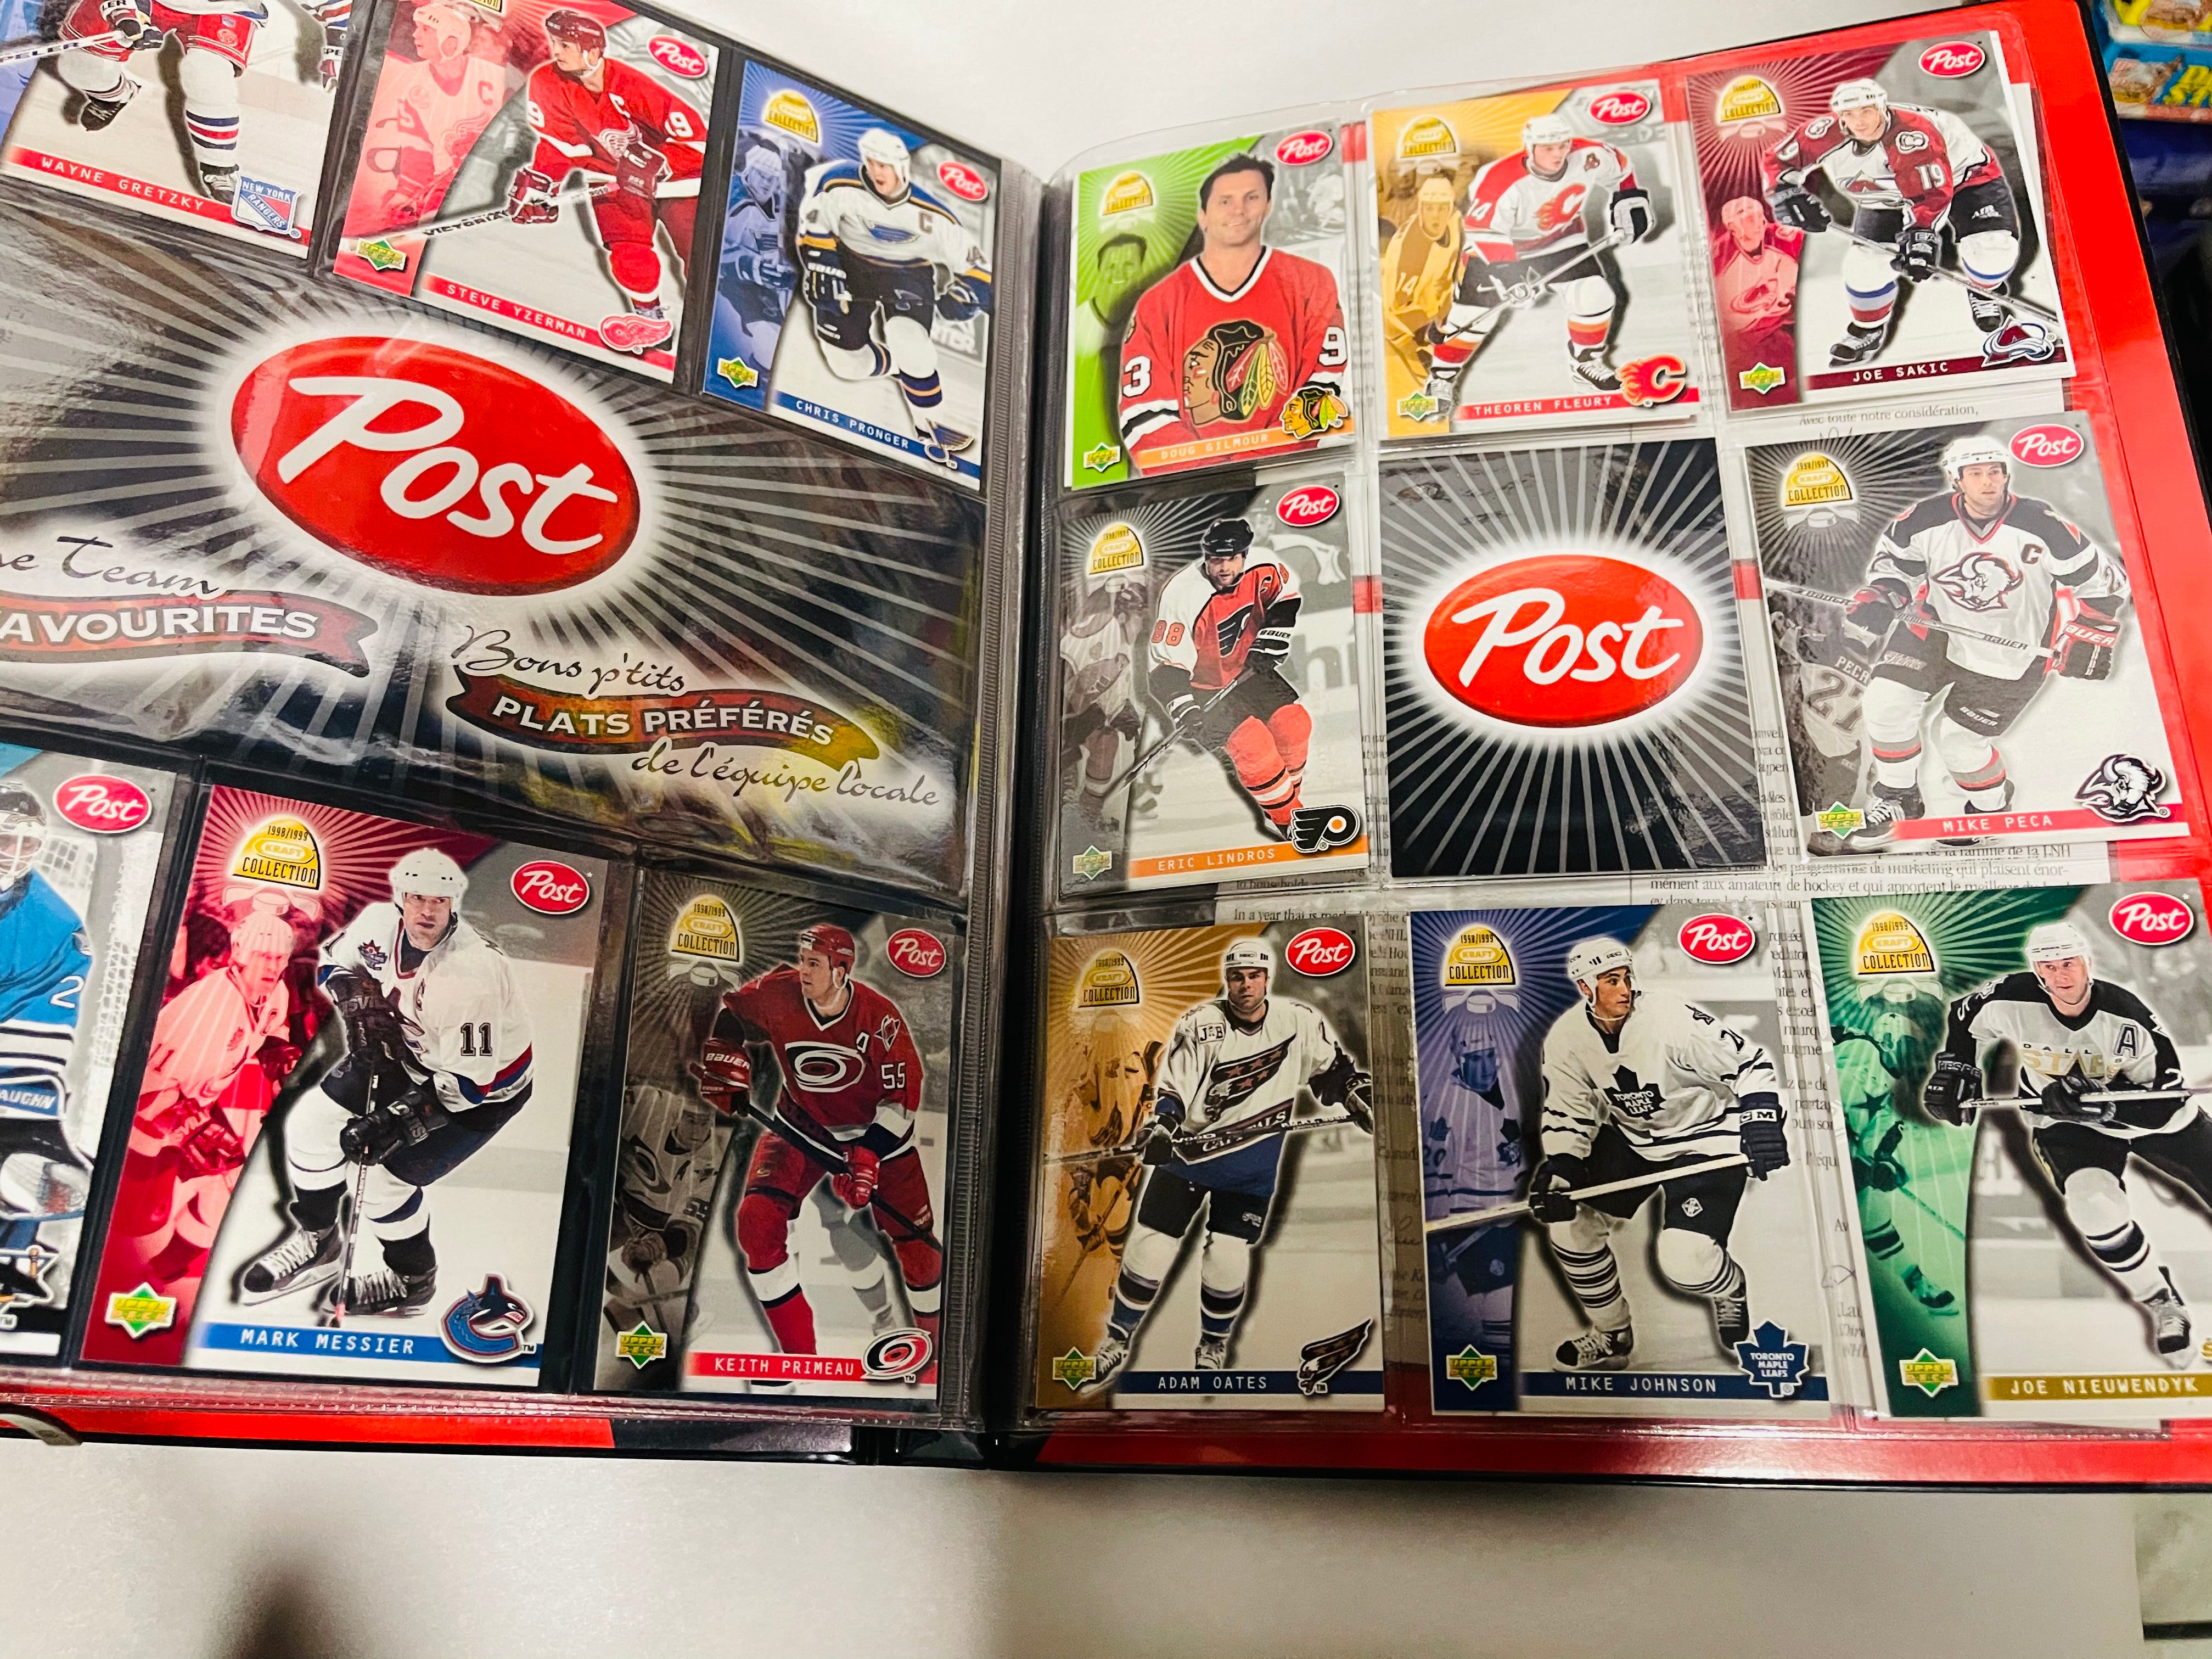 Kraft hockey cards set collection in binder 1998/99